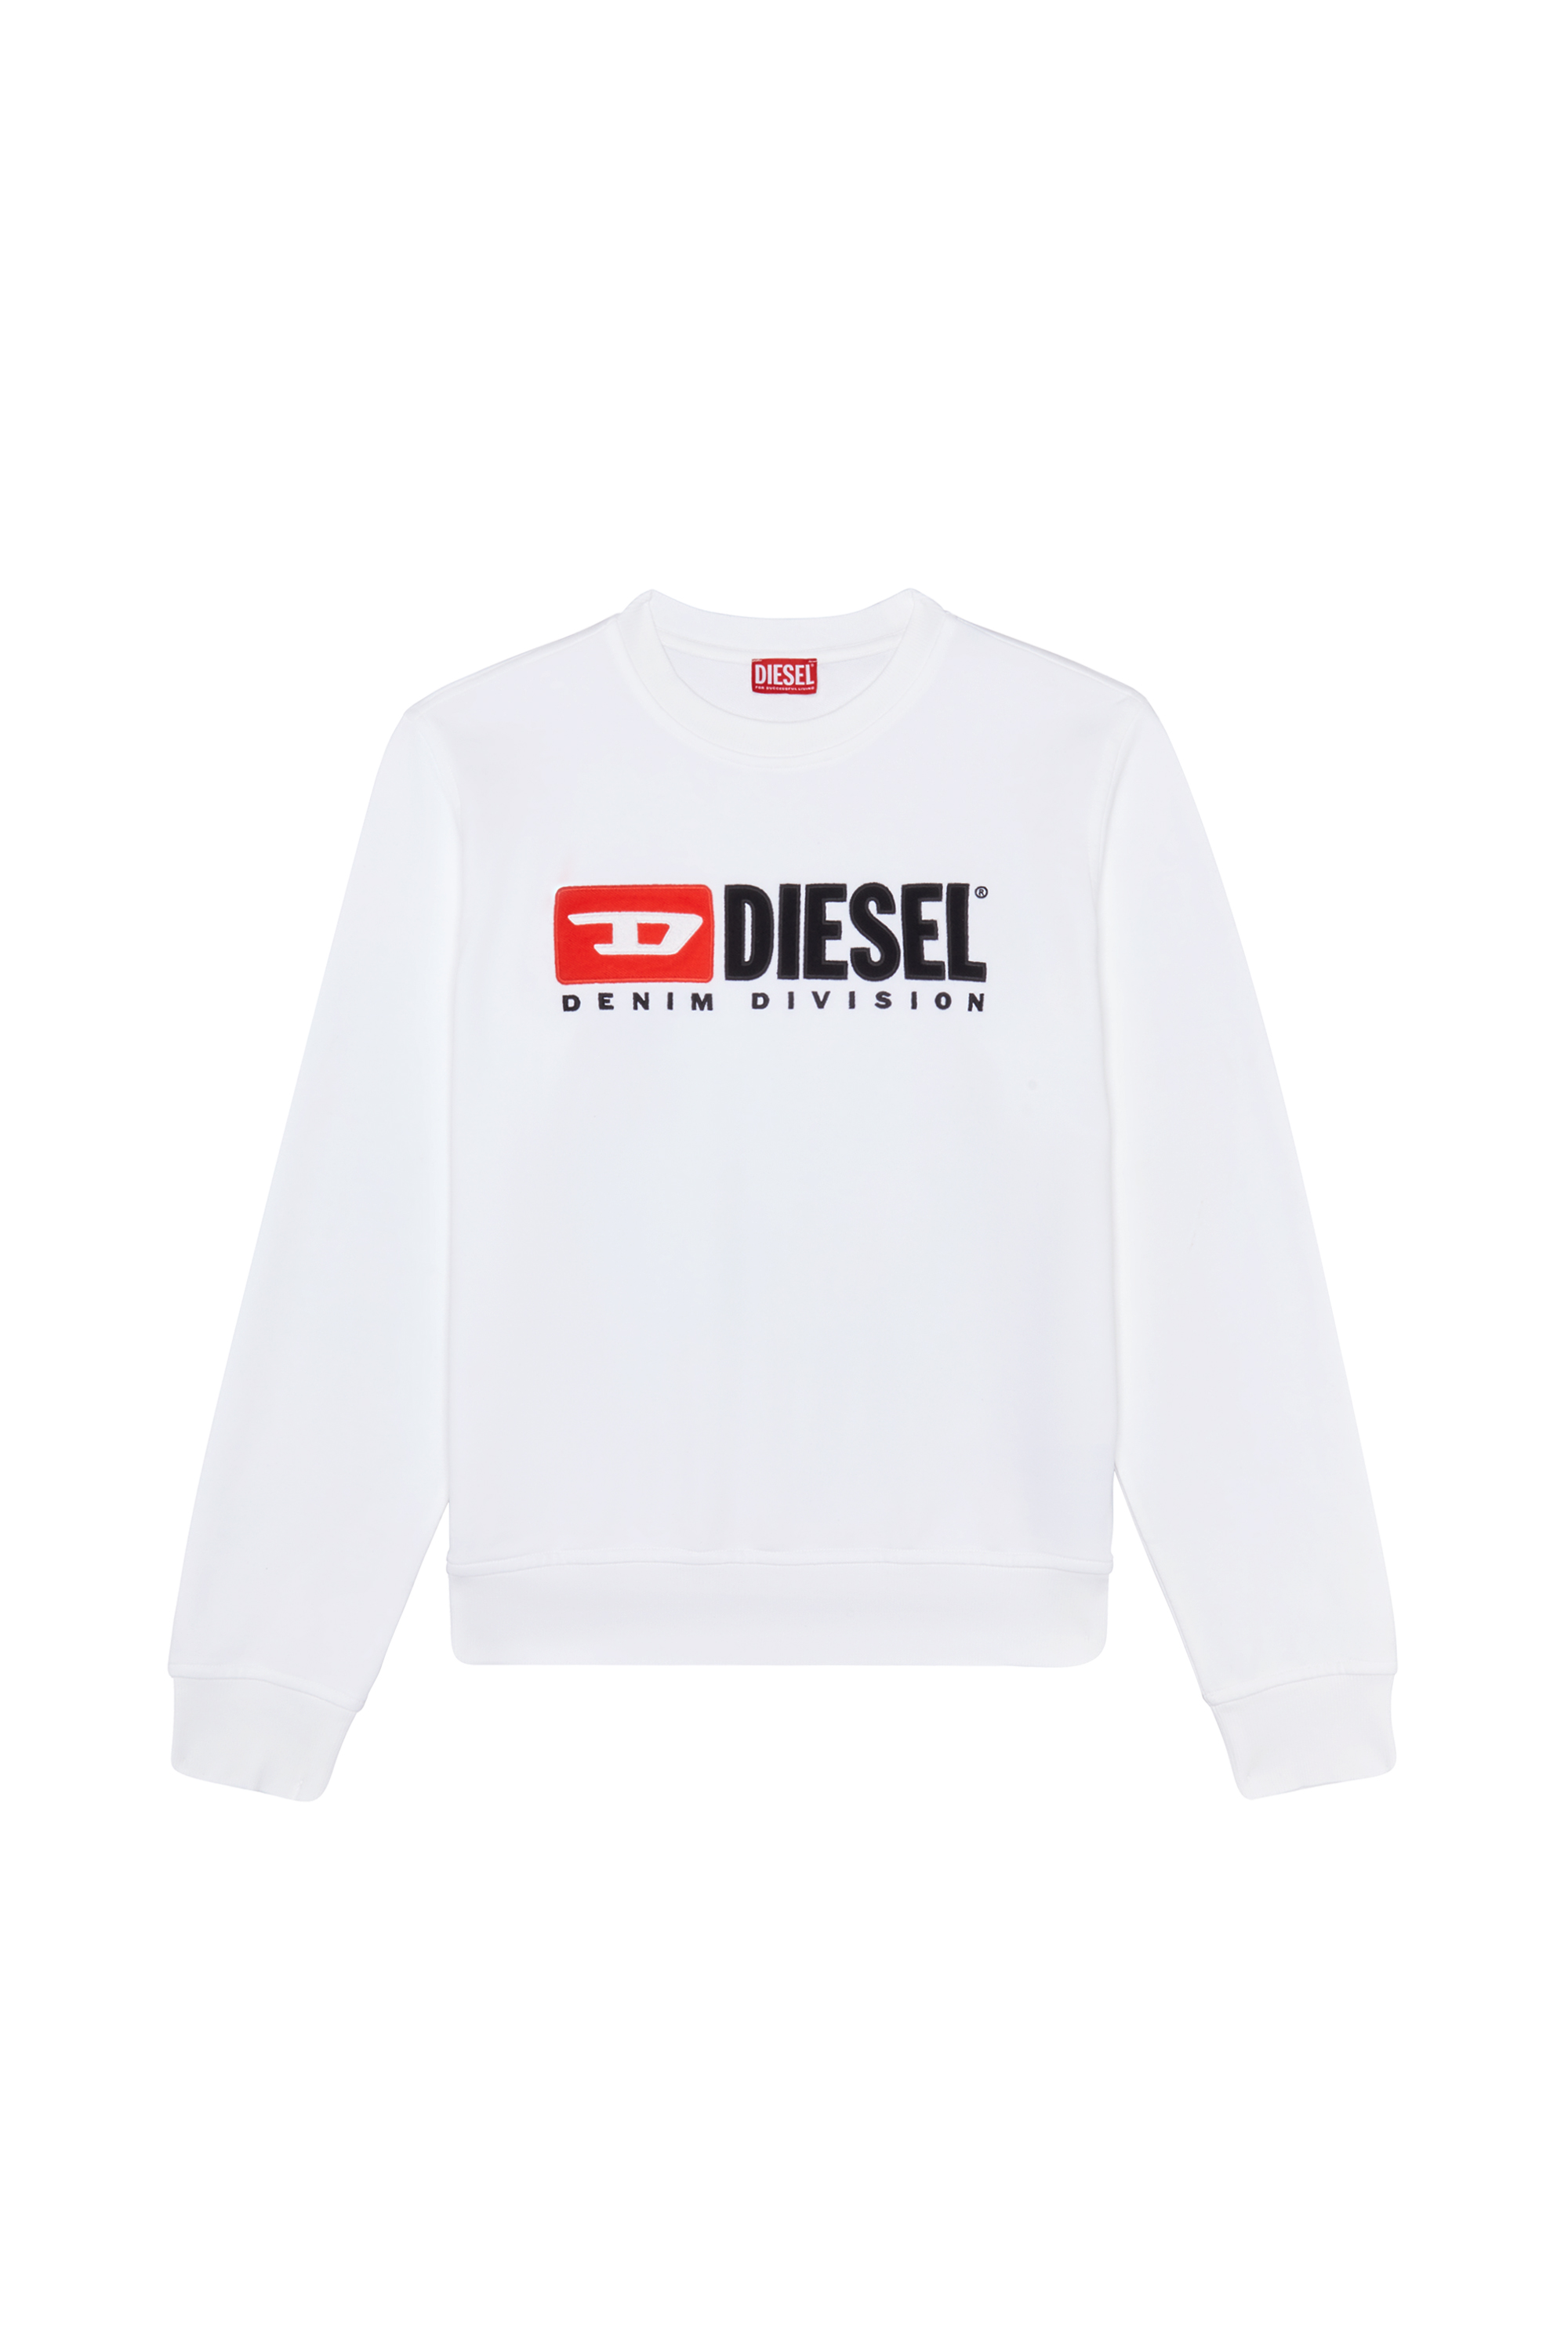 Diesel - S-GINN-DIV, White - Image 5